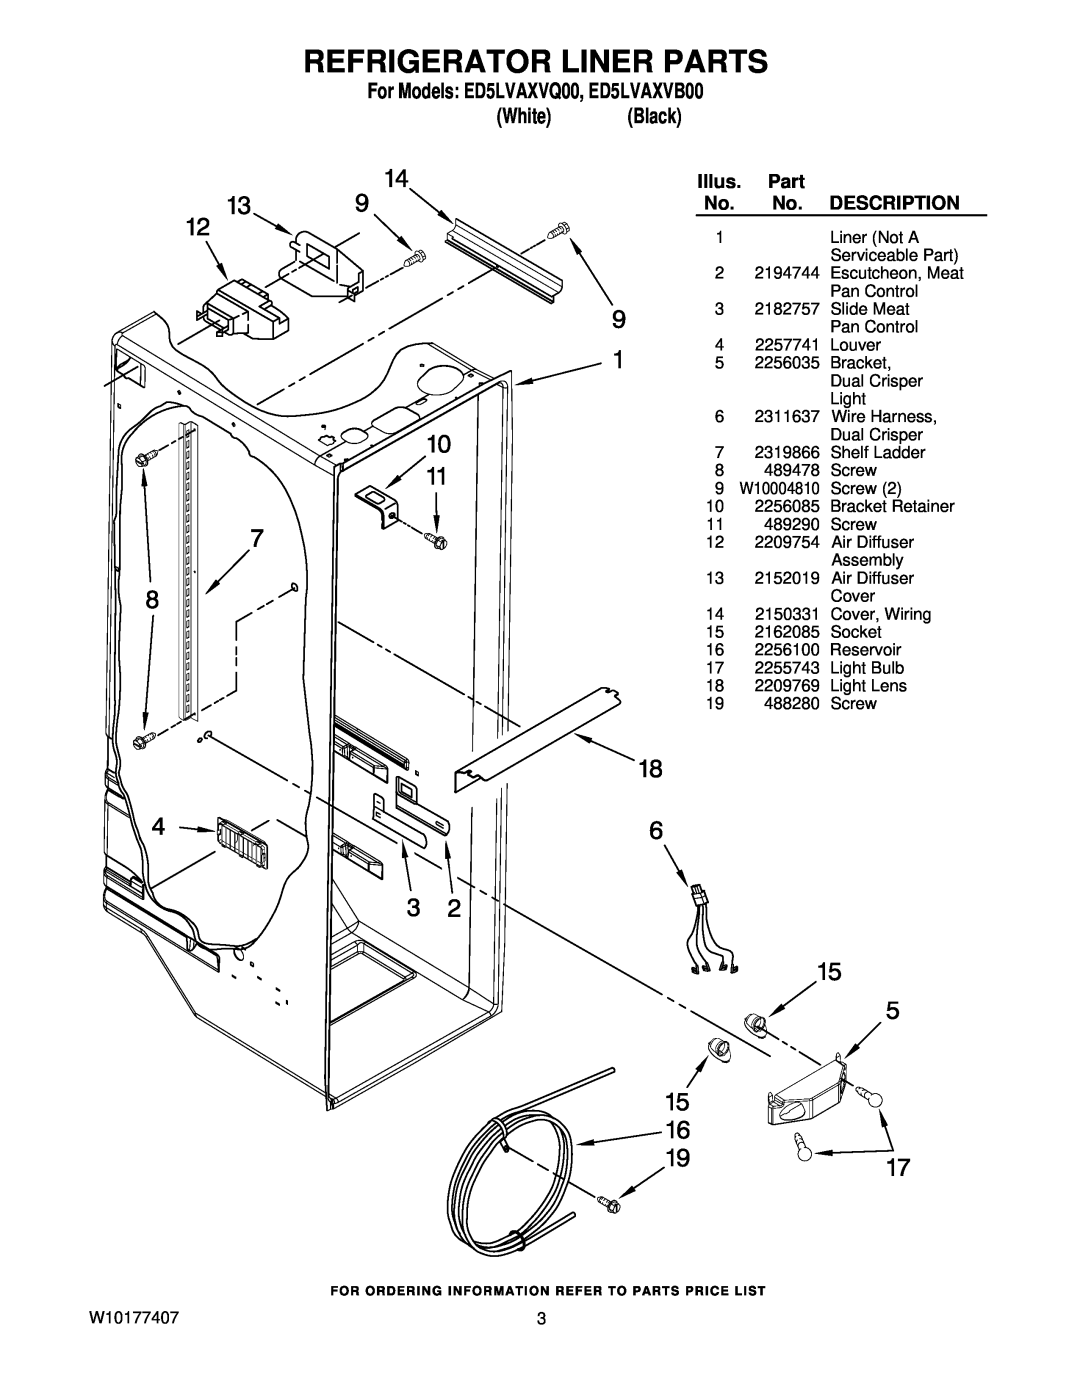 Whirlpool manual Refrigerator Liner Parts, Illus, Description, For Models ED5LVAXVQ00, ED5LVAXVB00 White Black 